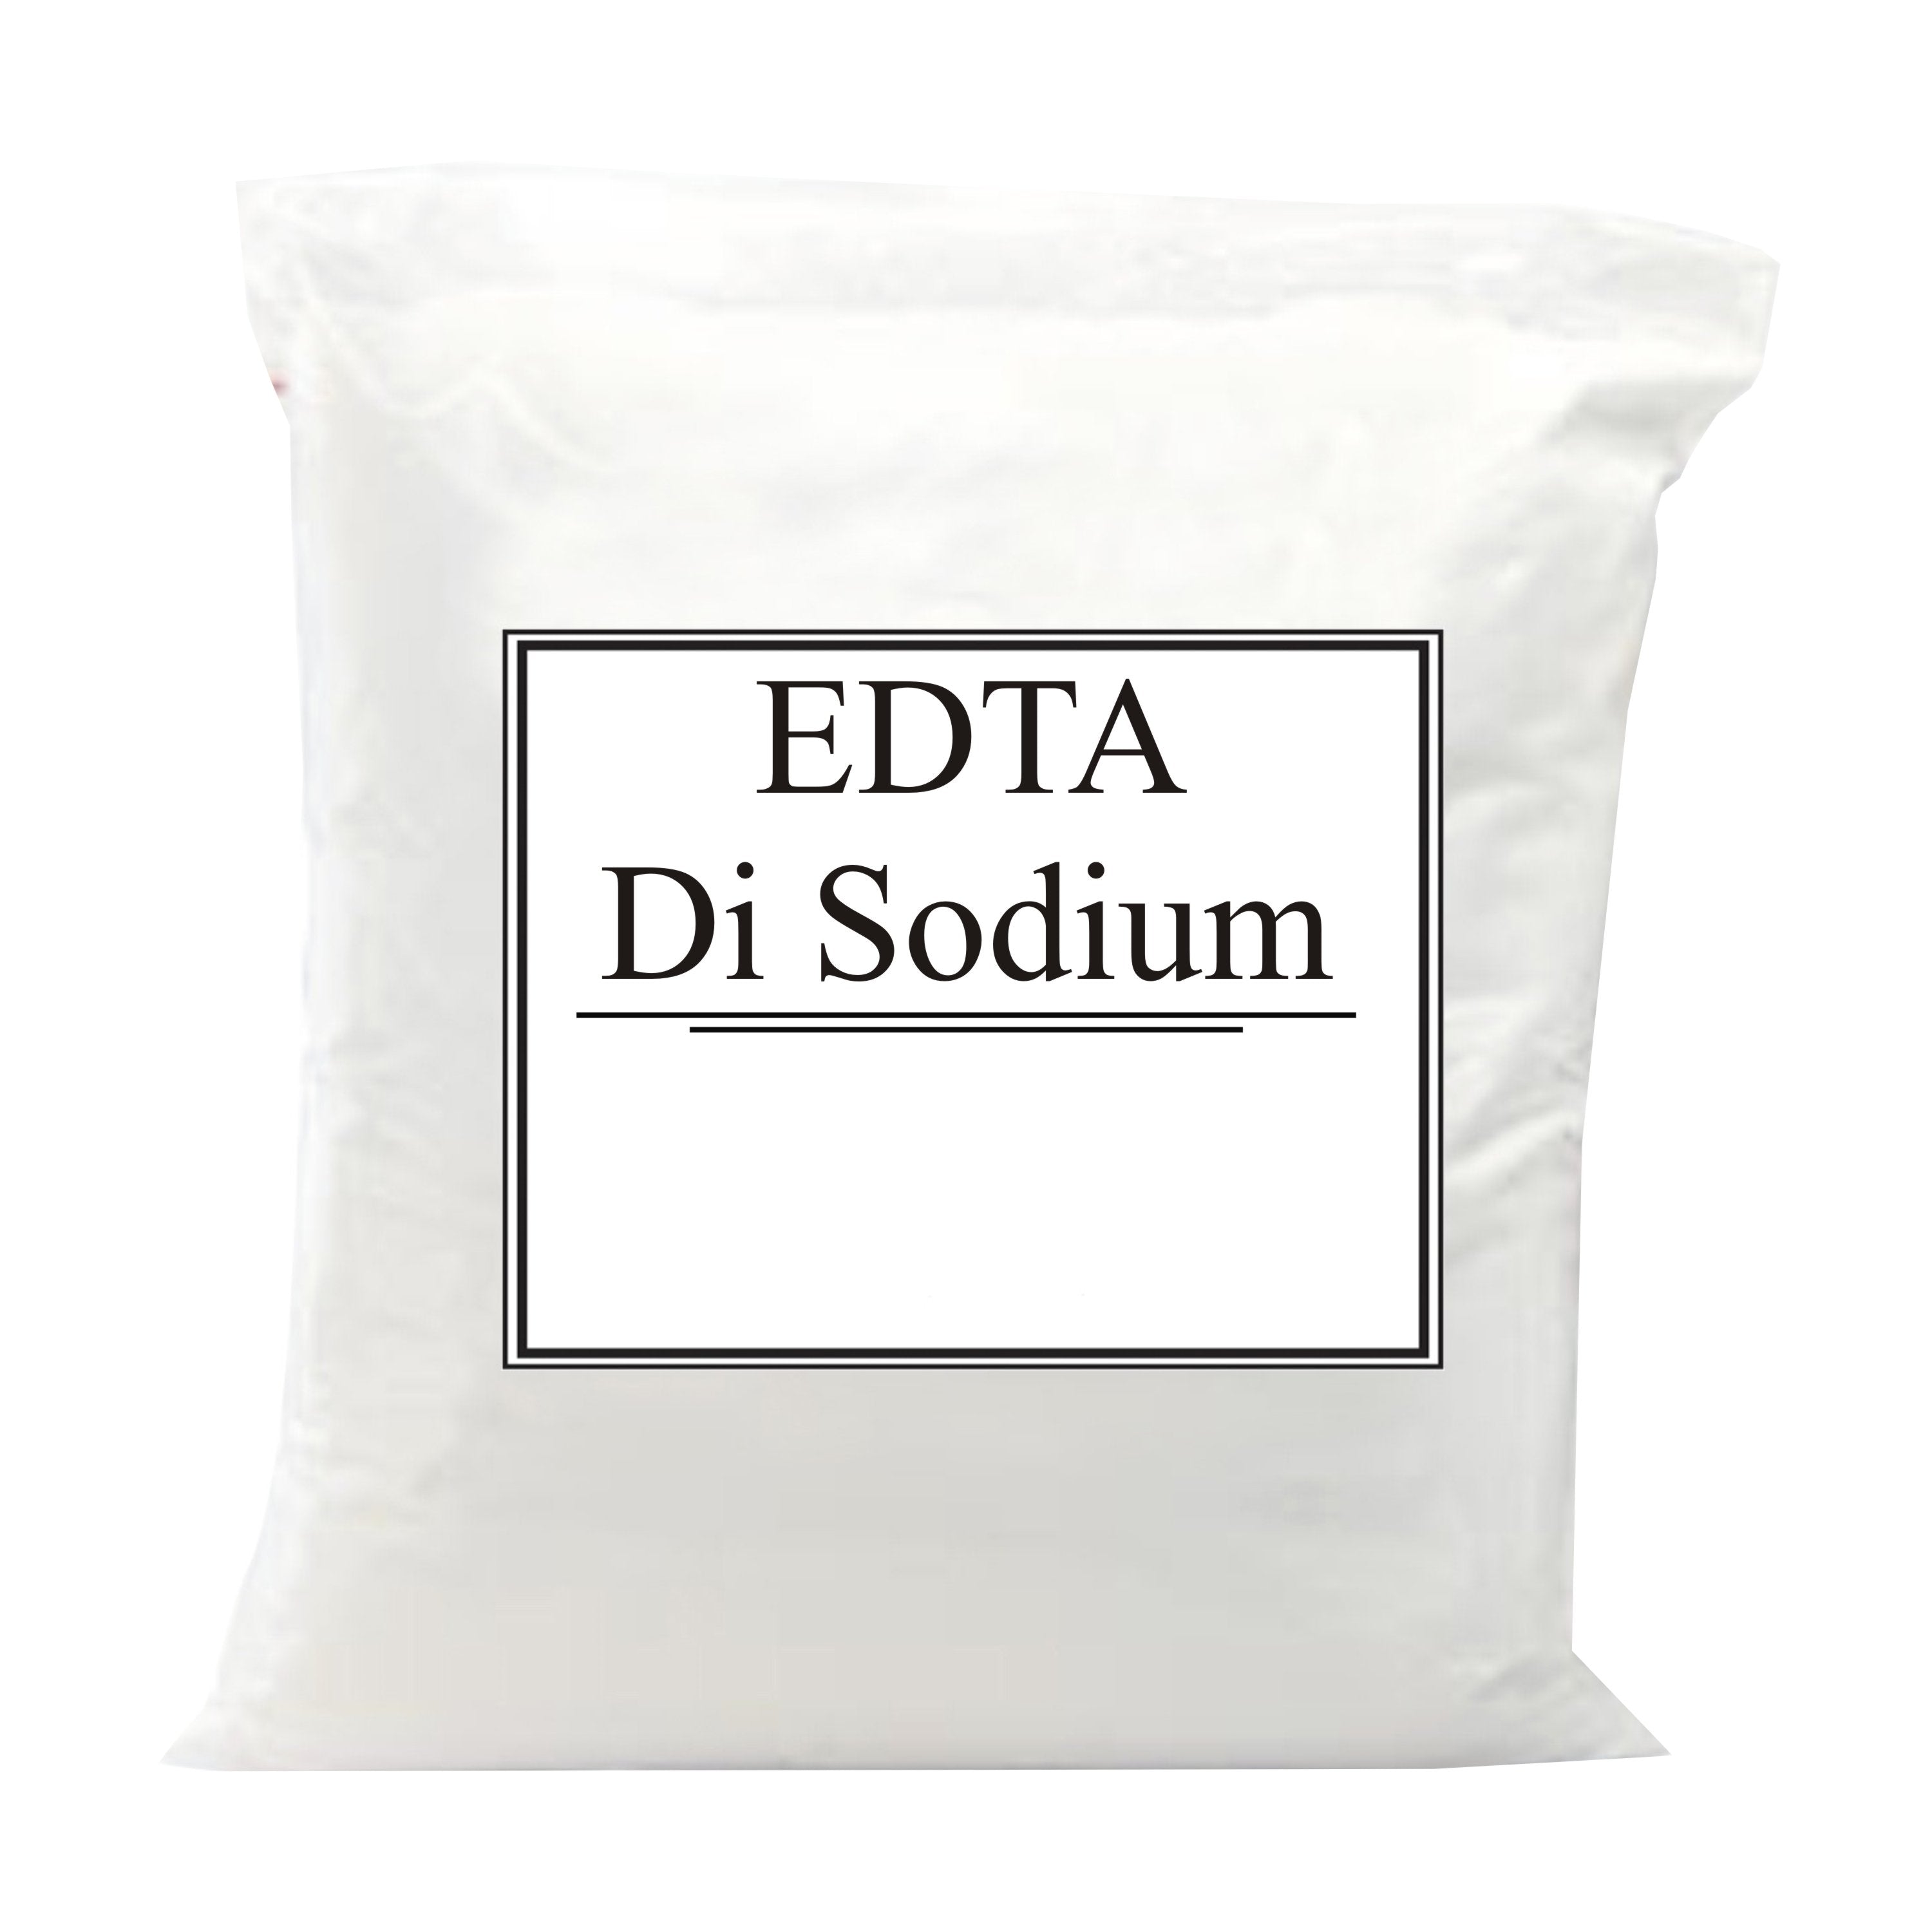 EDTA Di Sodium , raw cosmetic agent , zenvista , cosmetic agent , emulsifiers , foam builder agent , ph stabilizer , antibactterial agent , soap making , surfactant making , preservative agent .